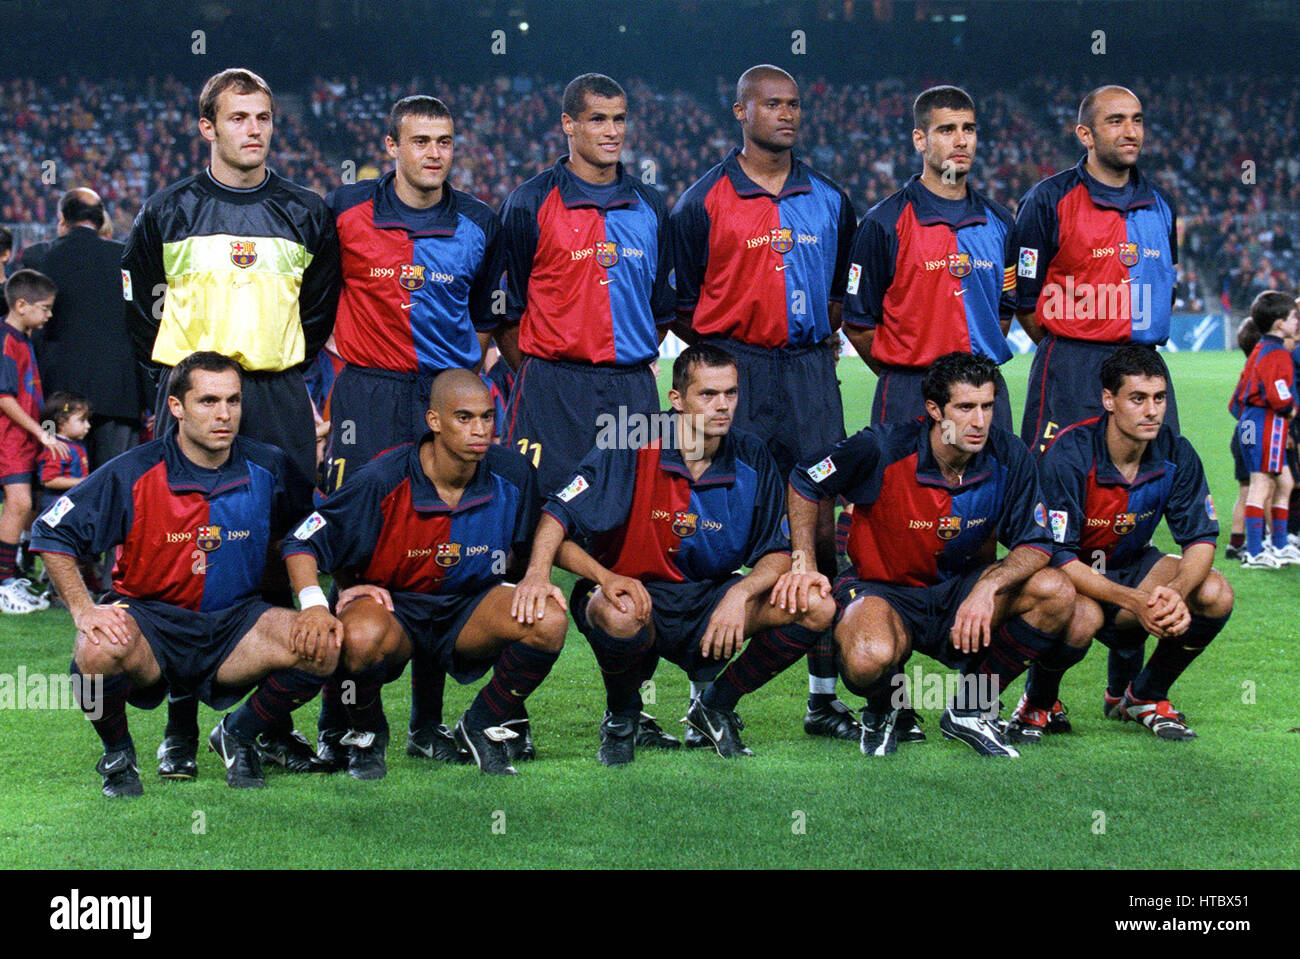 FC BARCELONA TEAM Gruppe 7. November 1999 Stockfotografie - Alamy